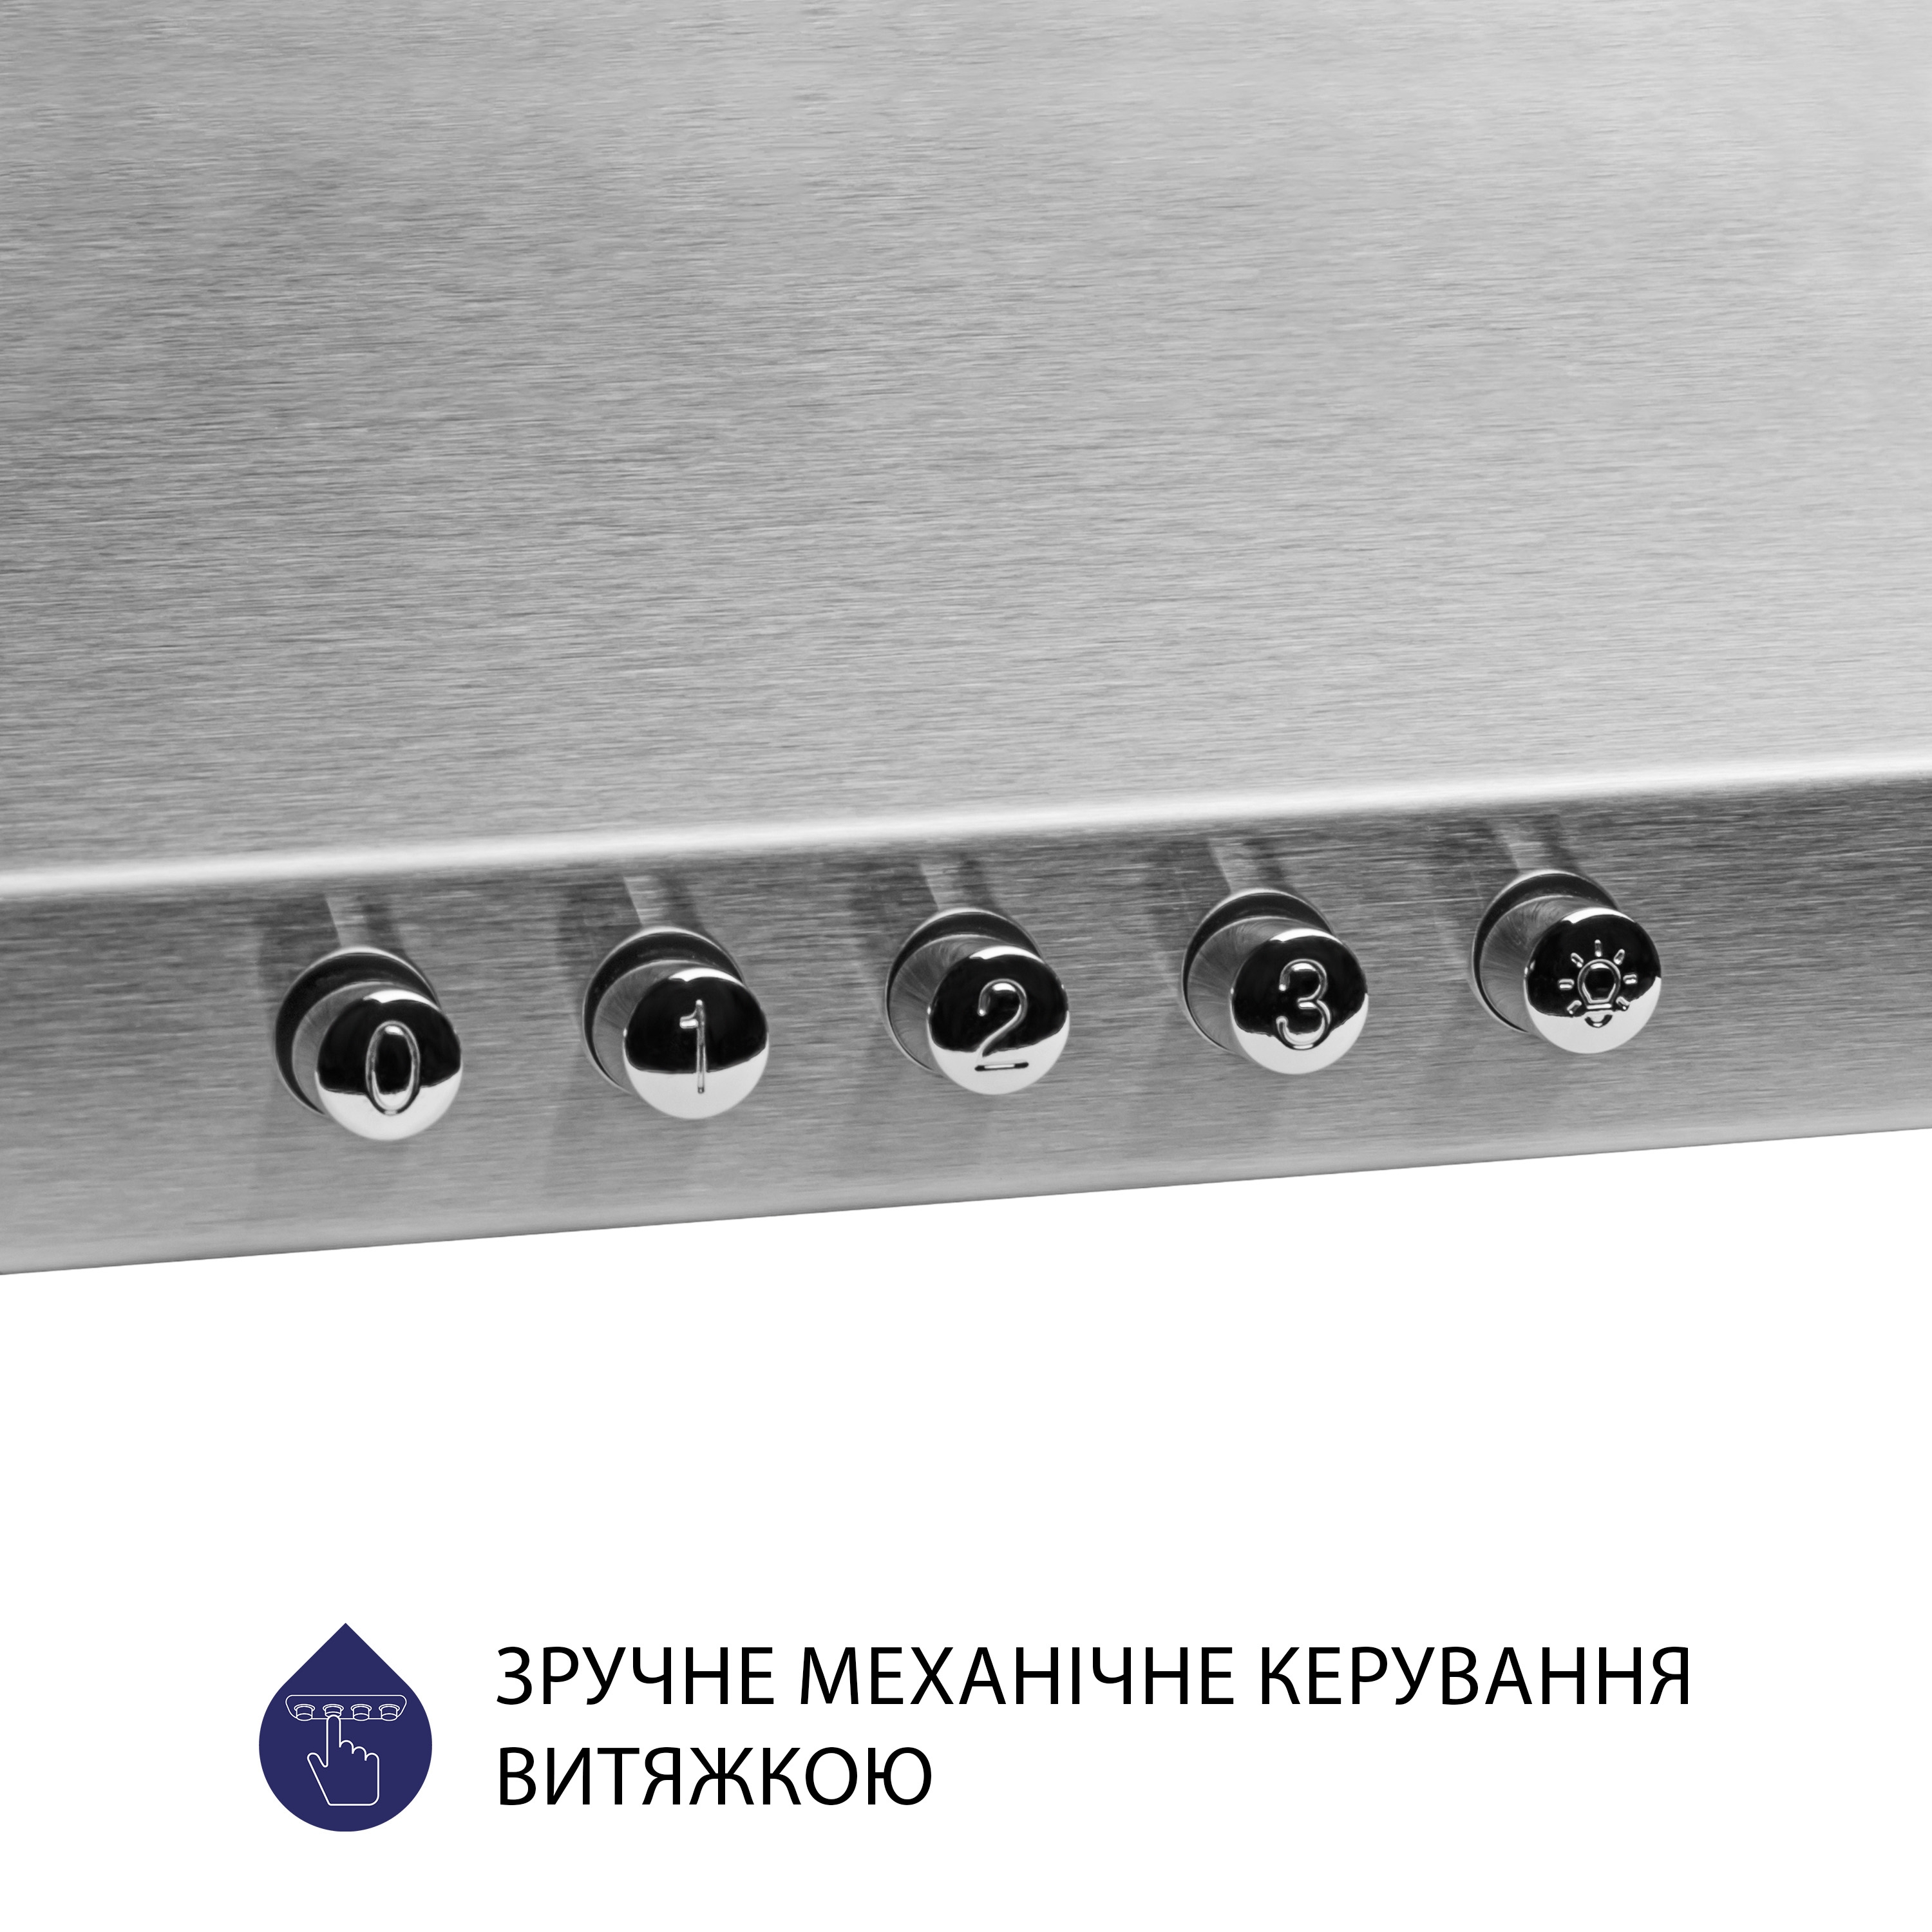 продаём Minola HK 6614 I 1000 LED в Украине - фото 4